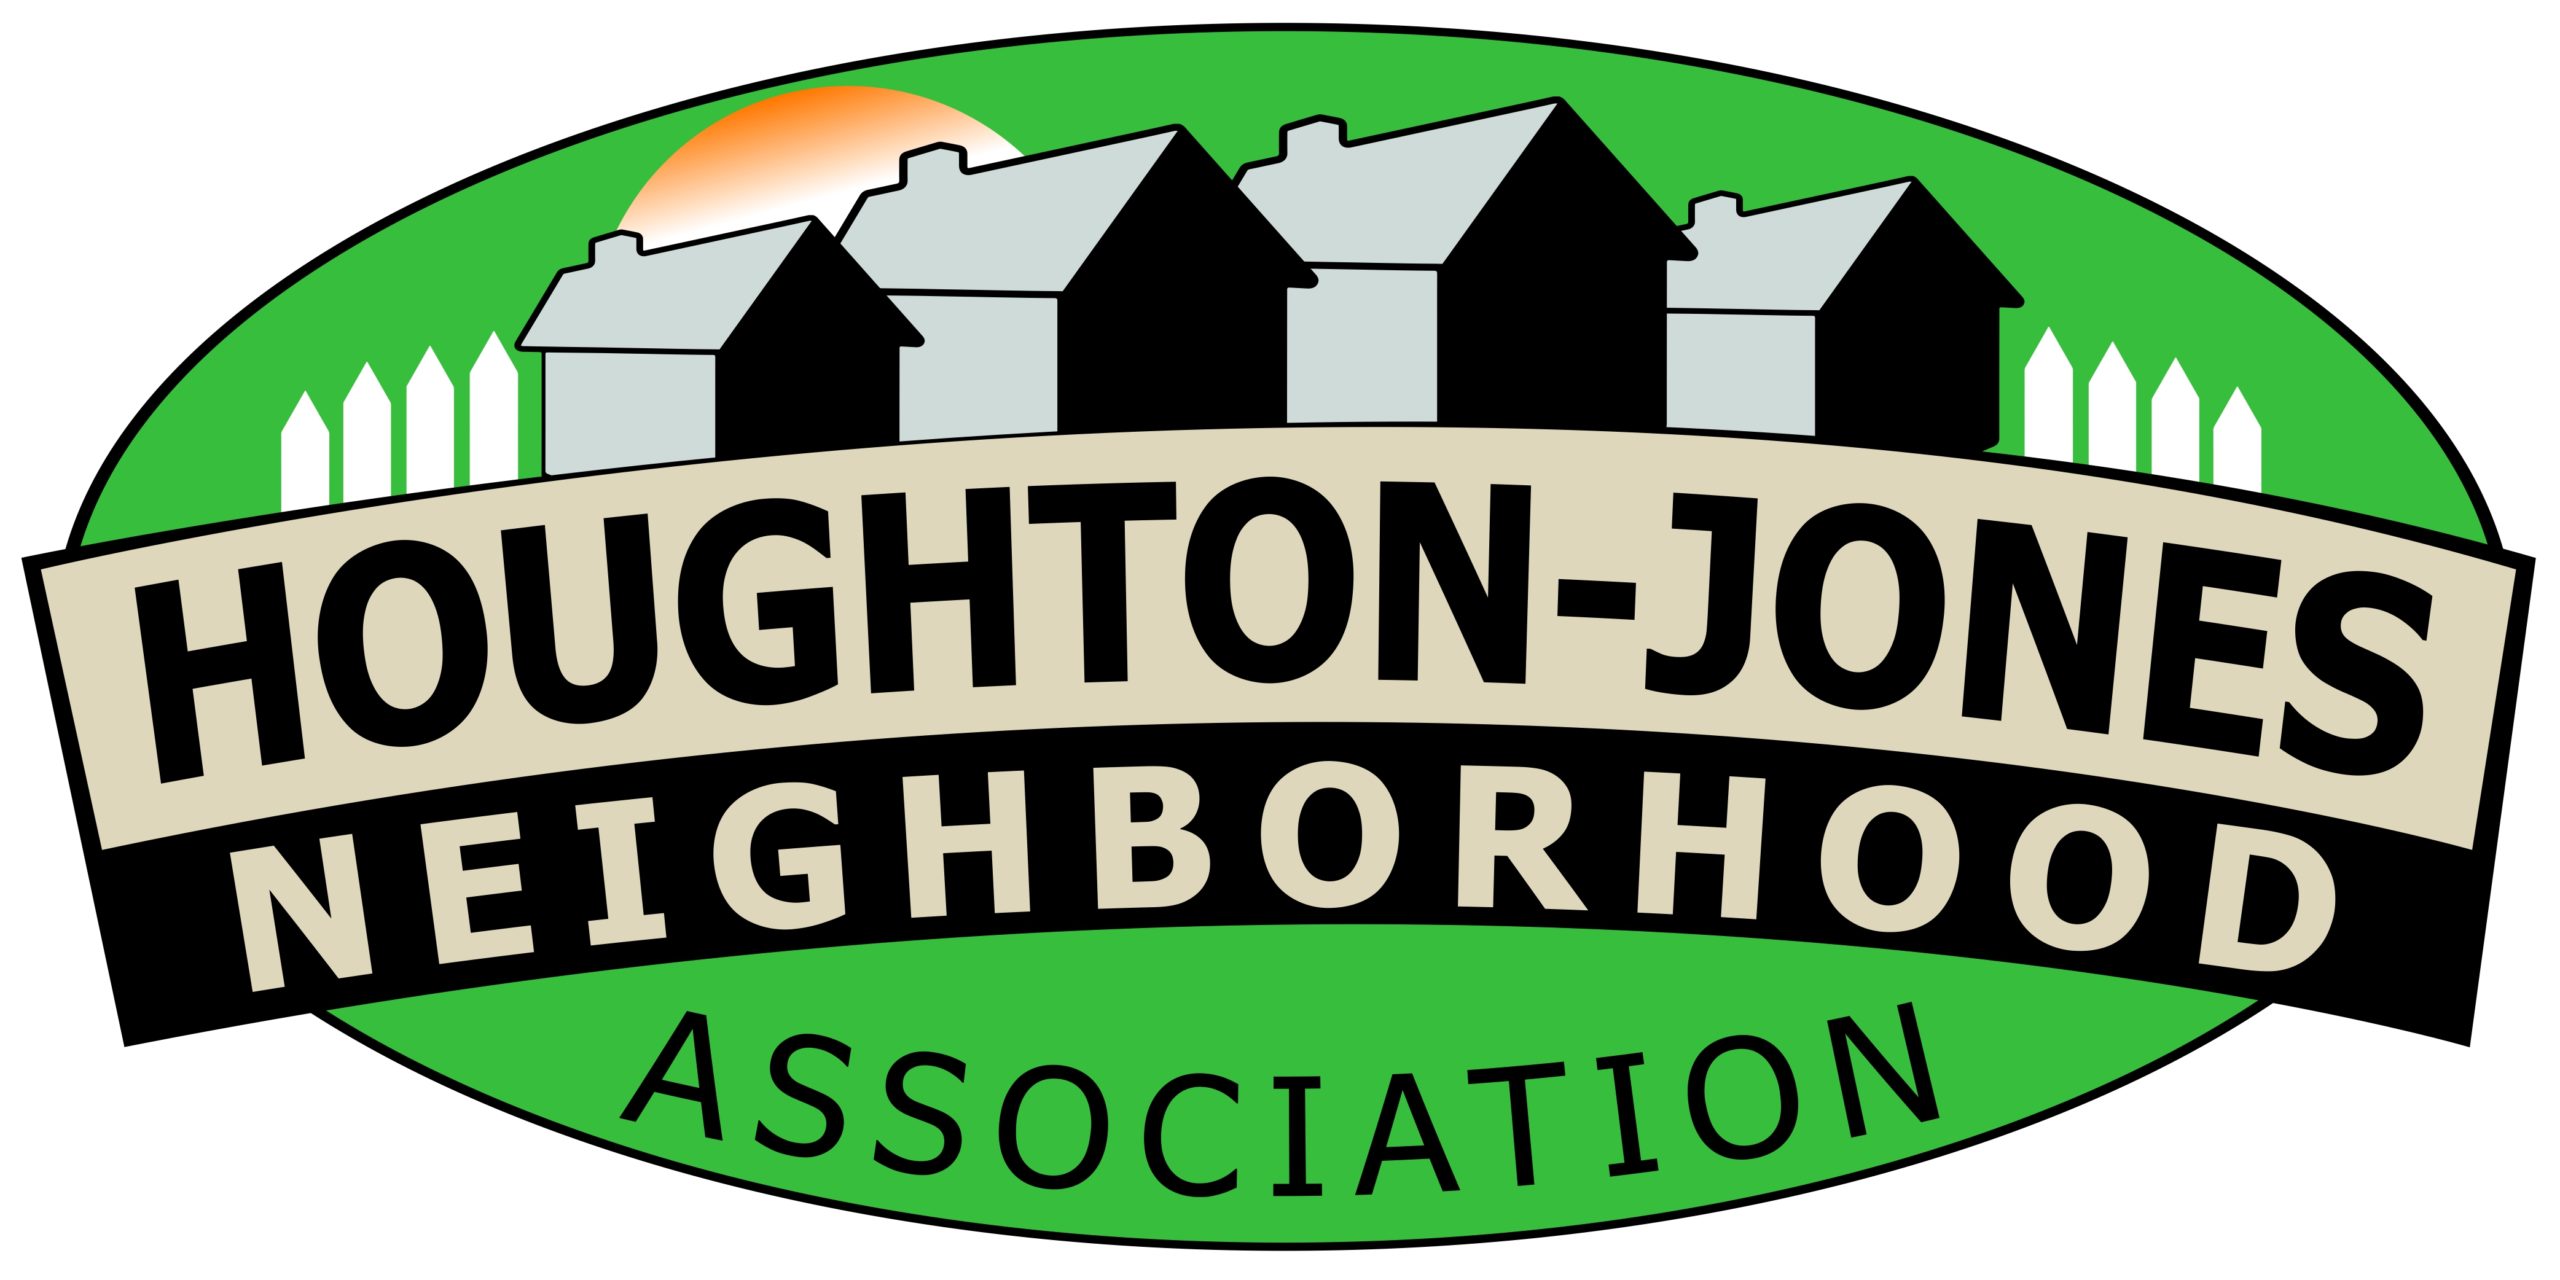 Houghton-Jones Neighborhood Association